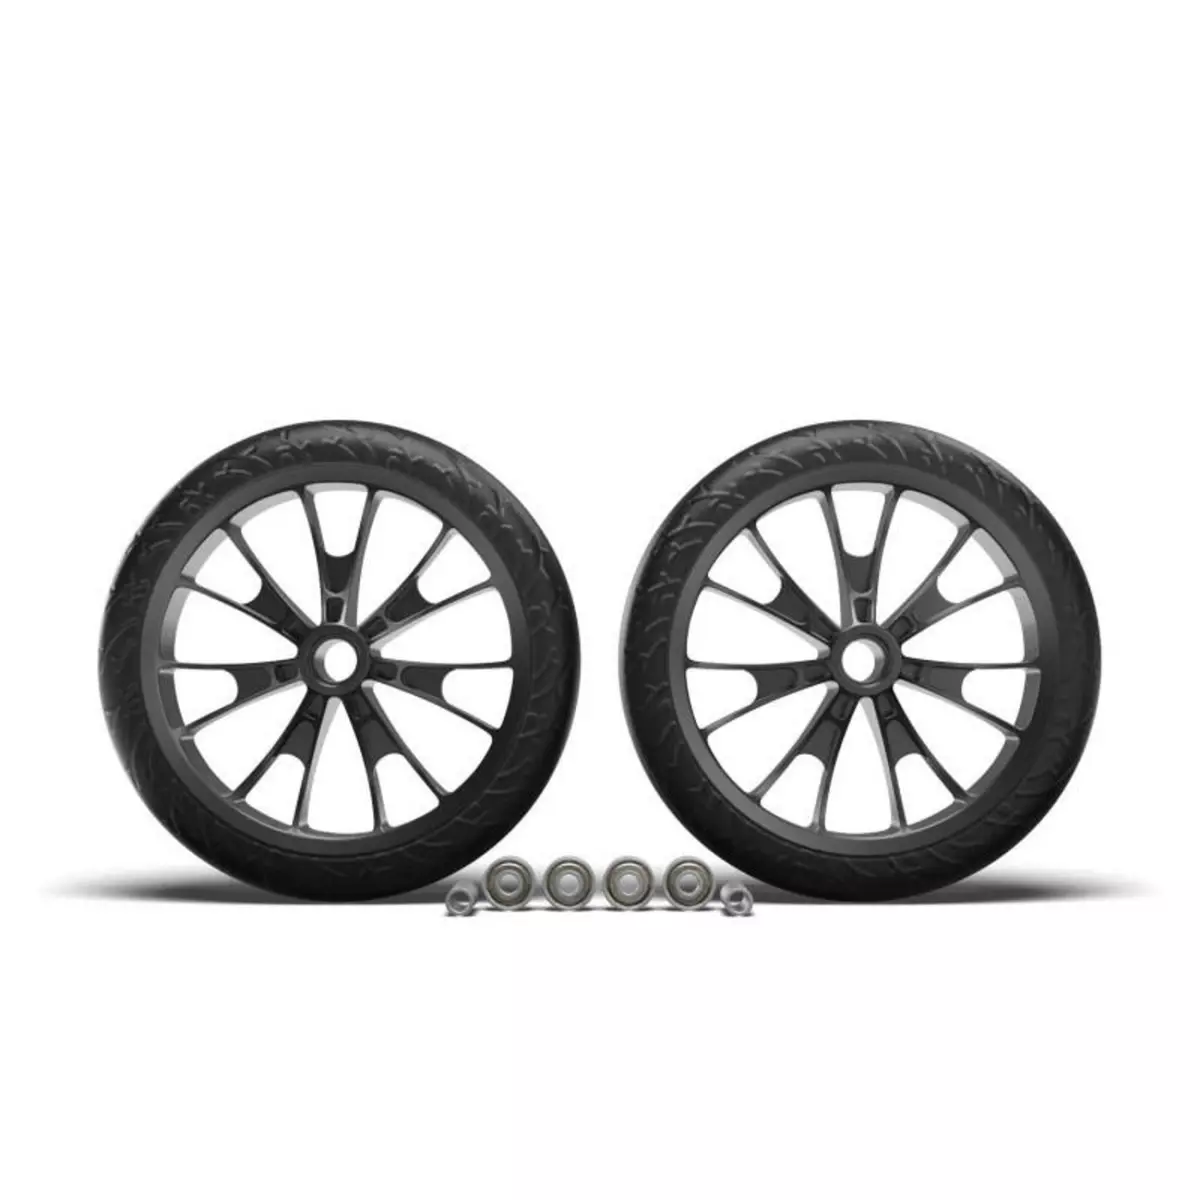 HUDORA Hudora Replacement Wheelset Crossover for BigWheel 205 14109/00